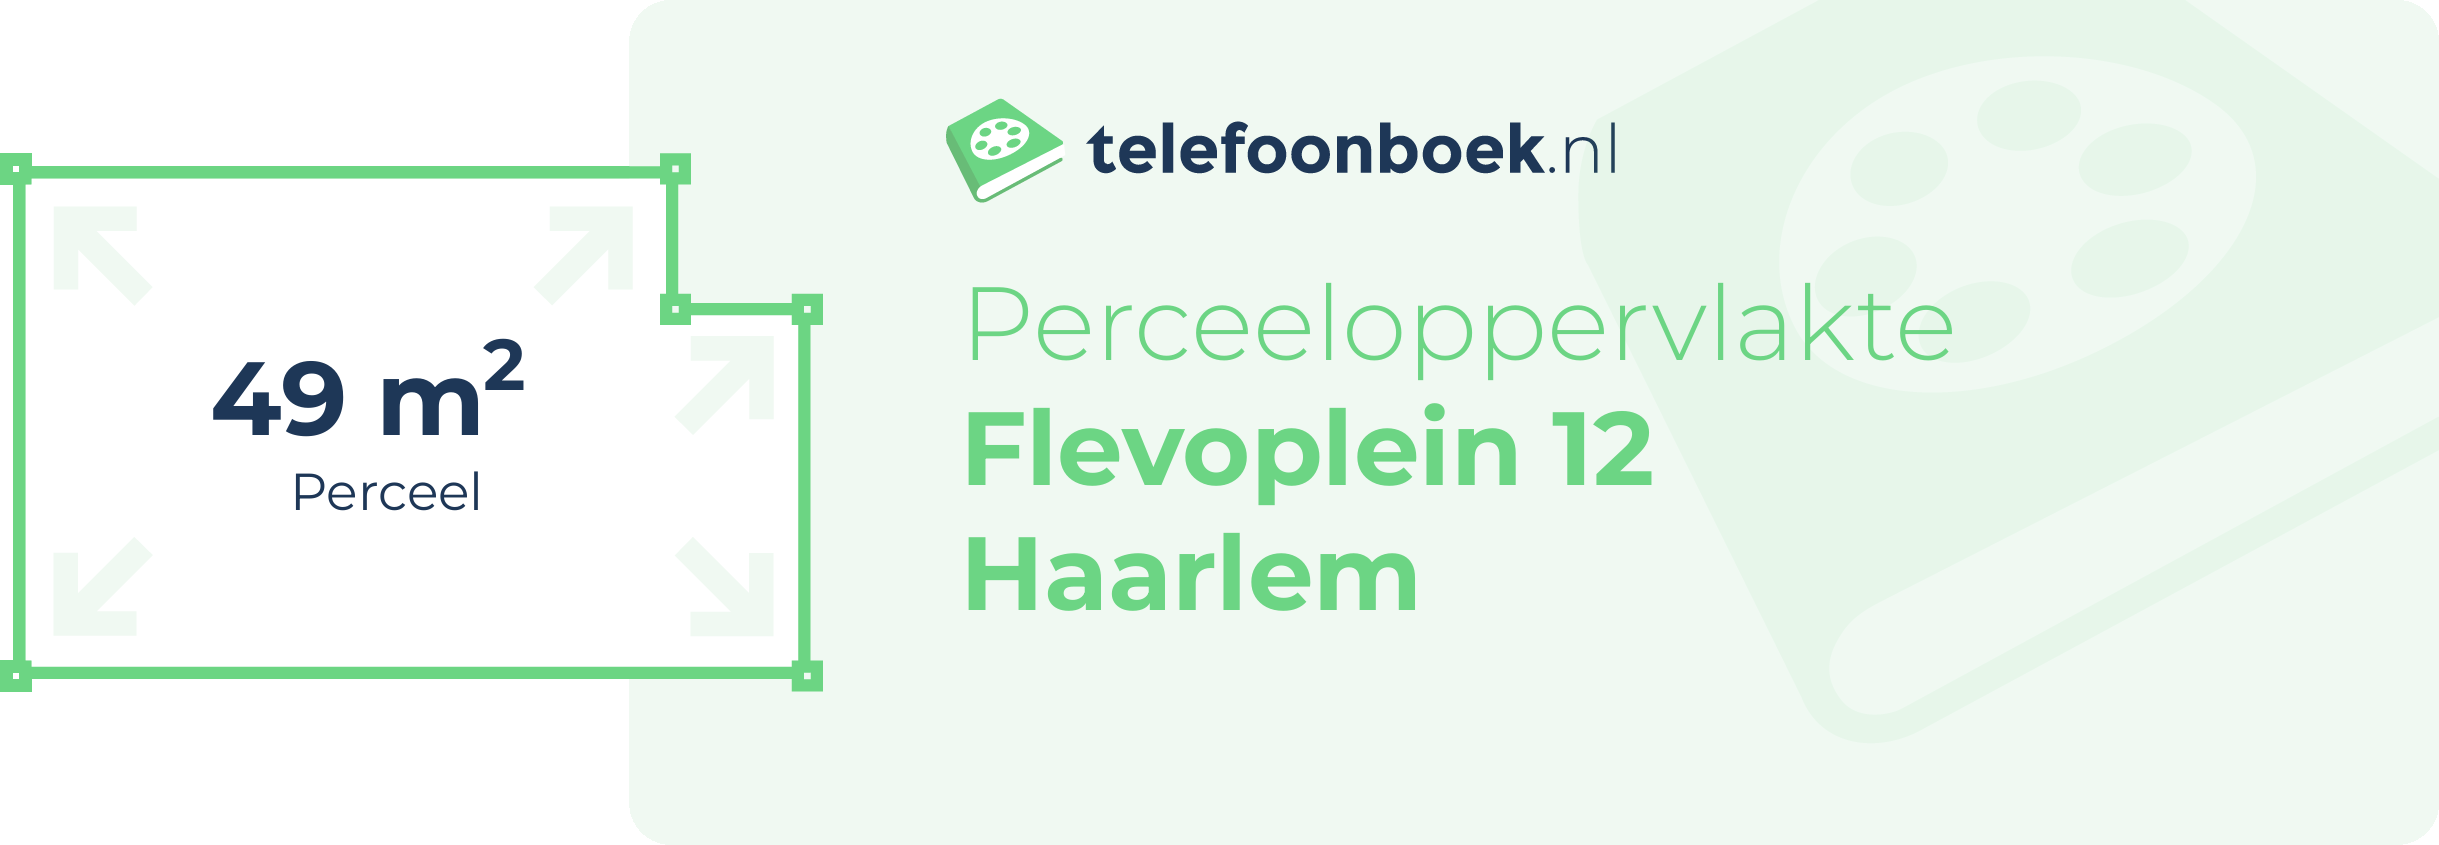 Perceeloppervlakte Flevoplein 12 Haarlem